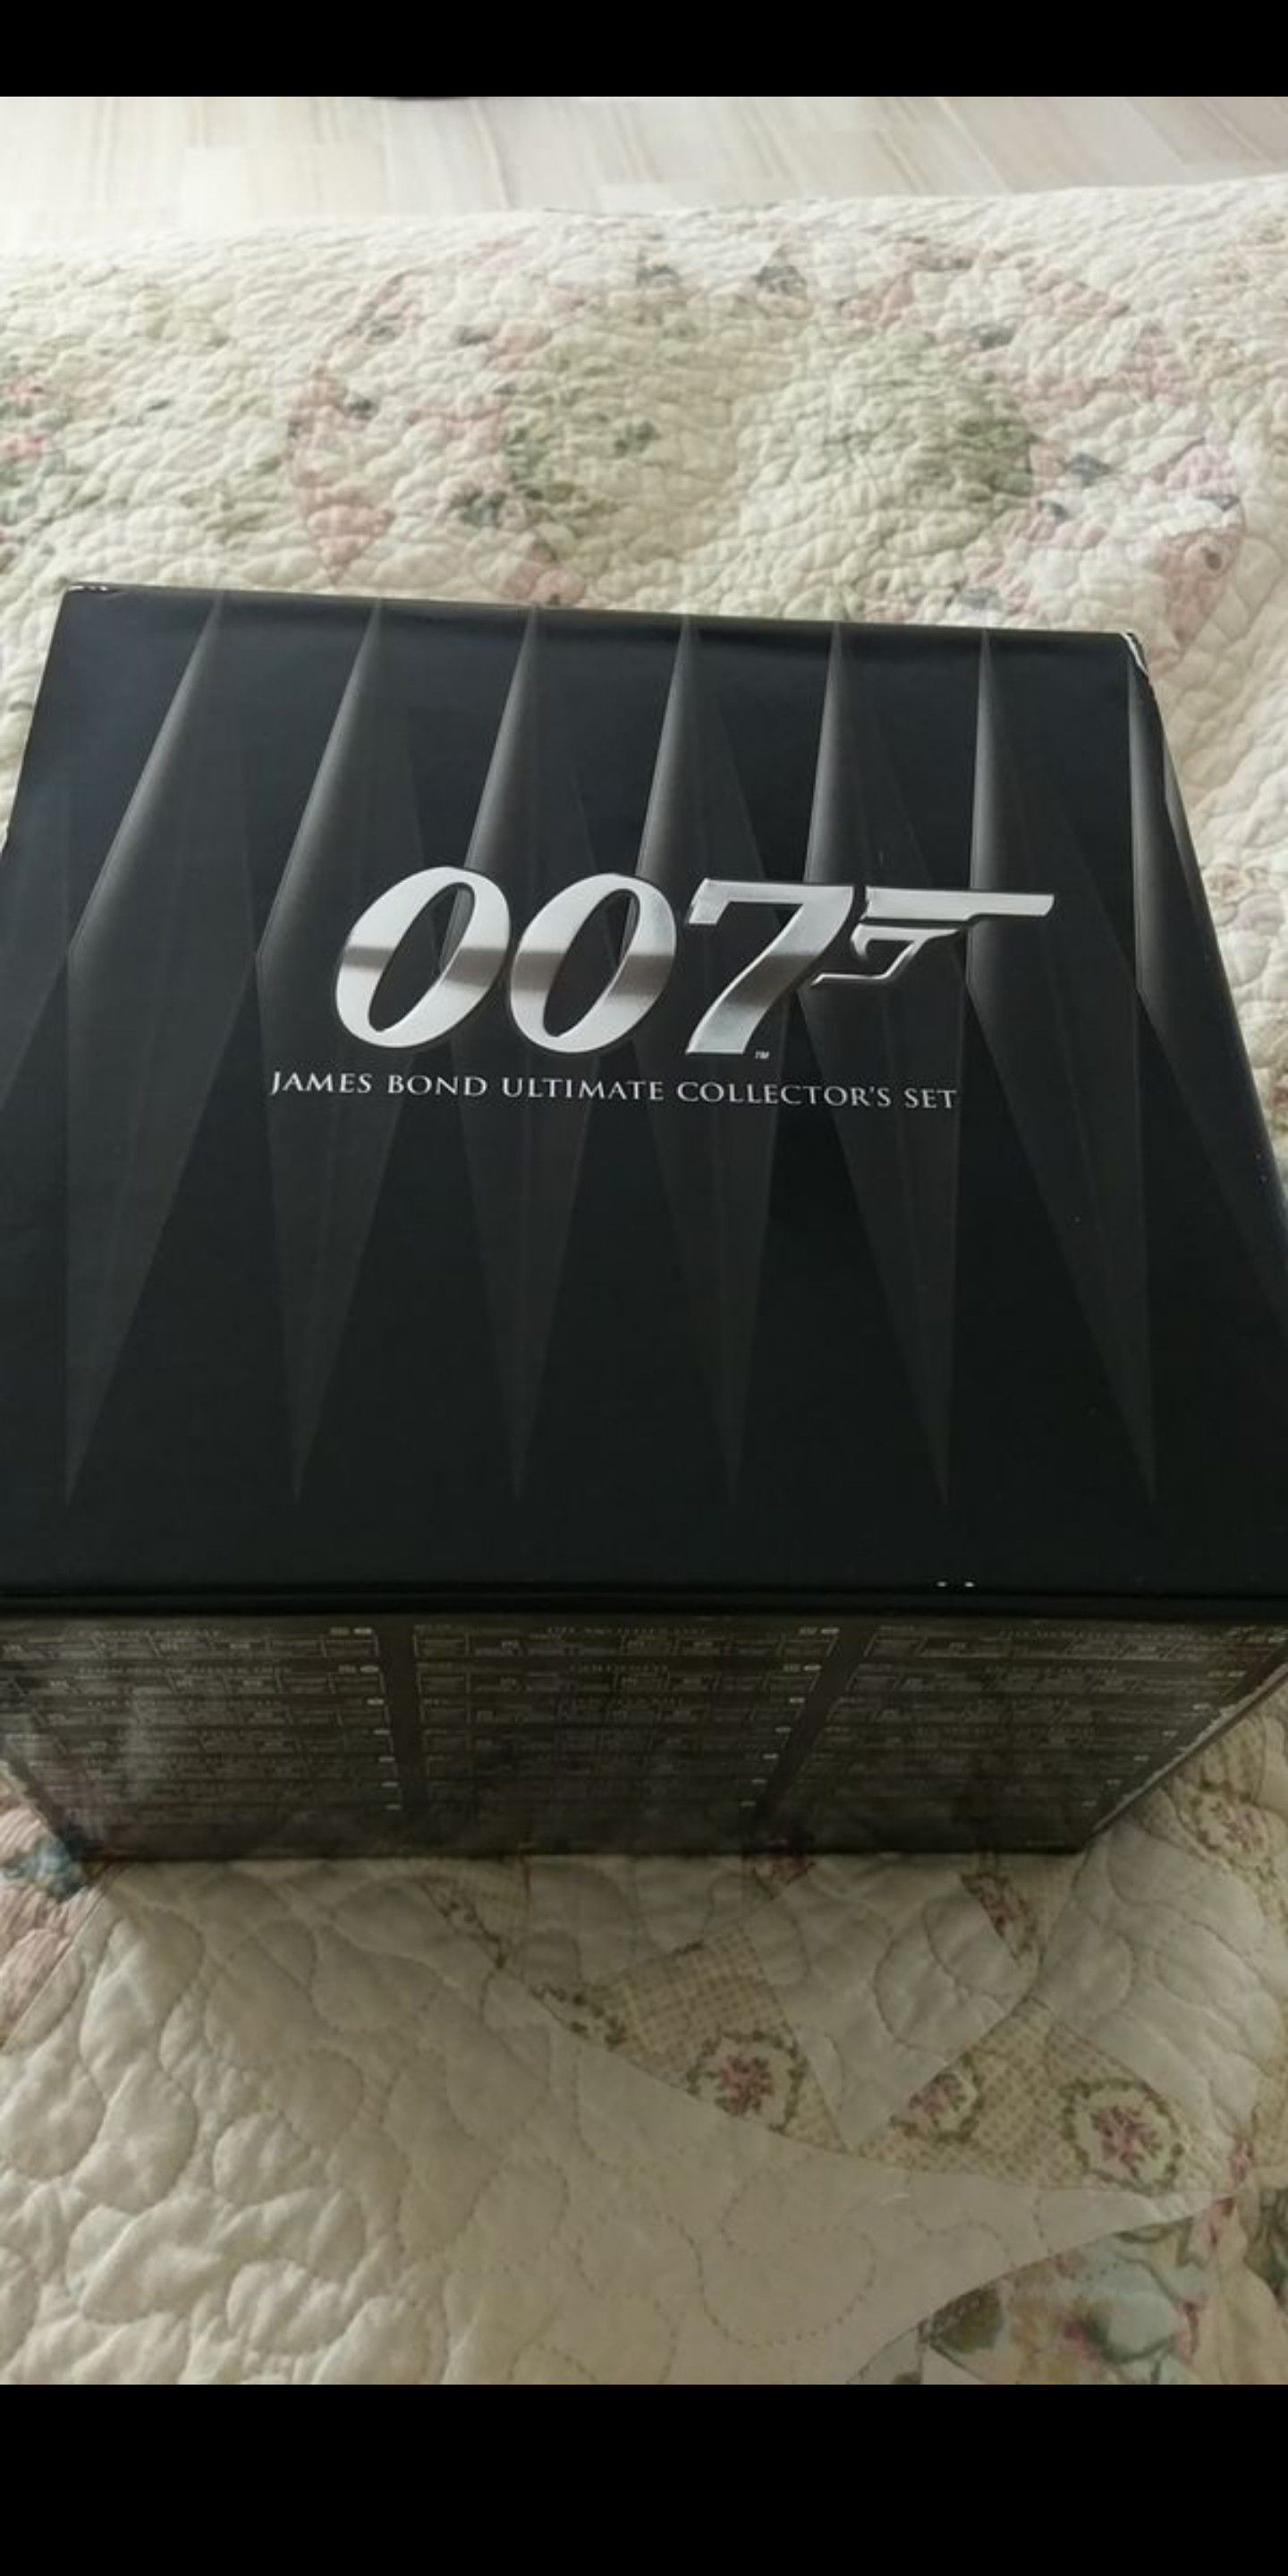 James Bond 007 ultimate collector's set